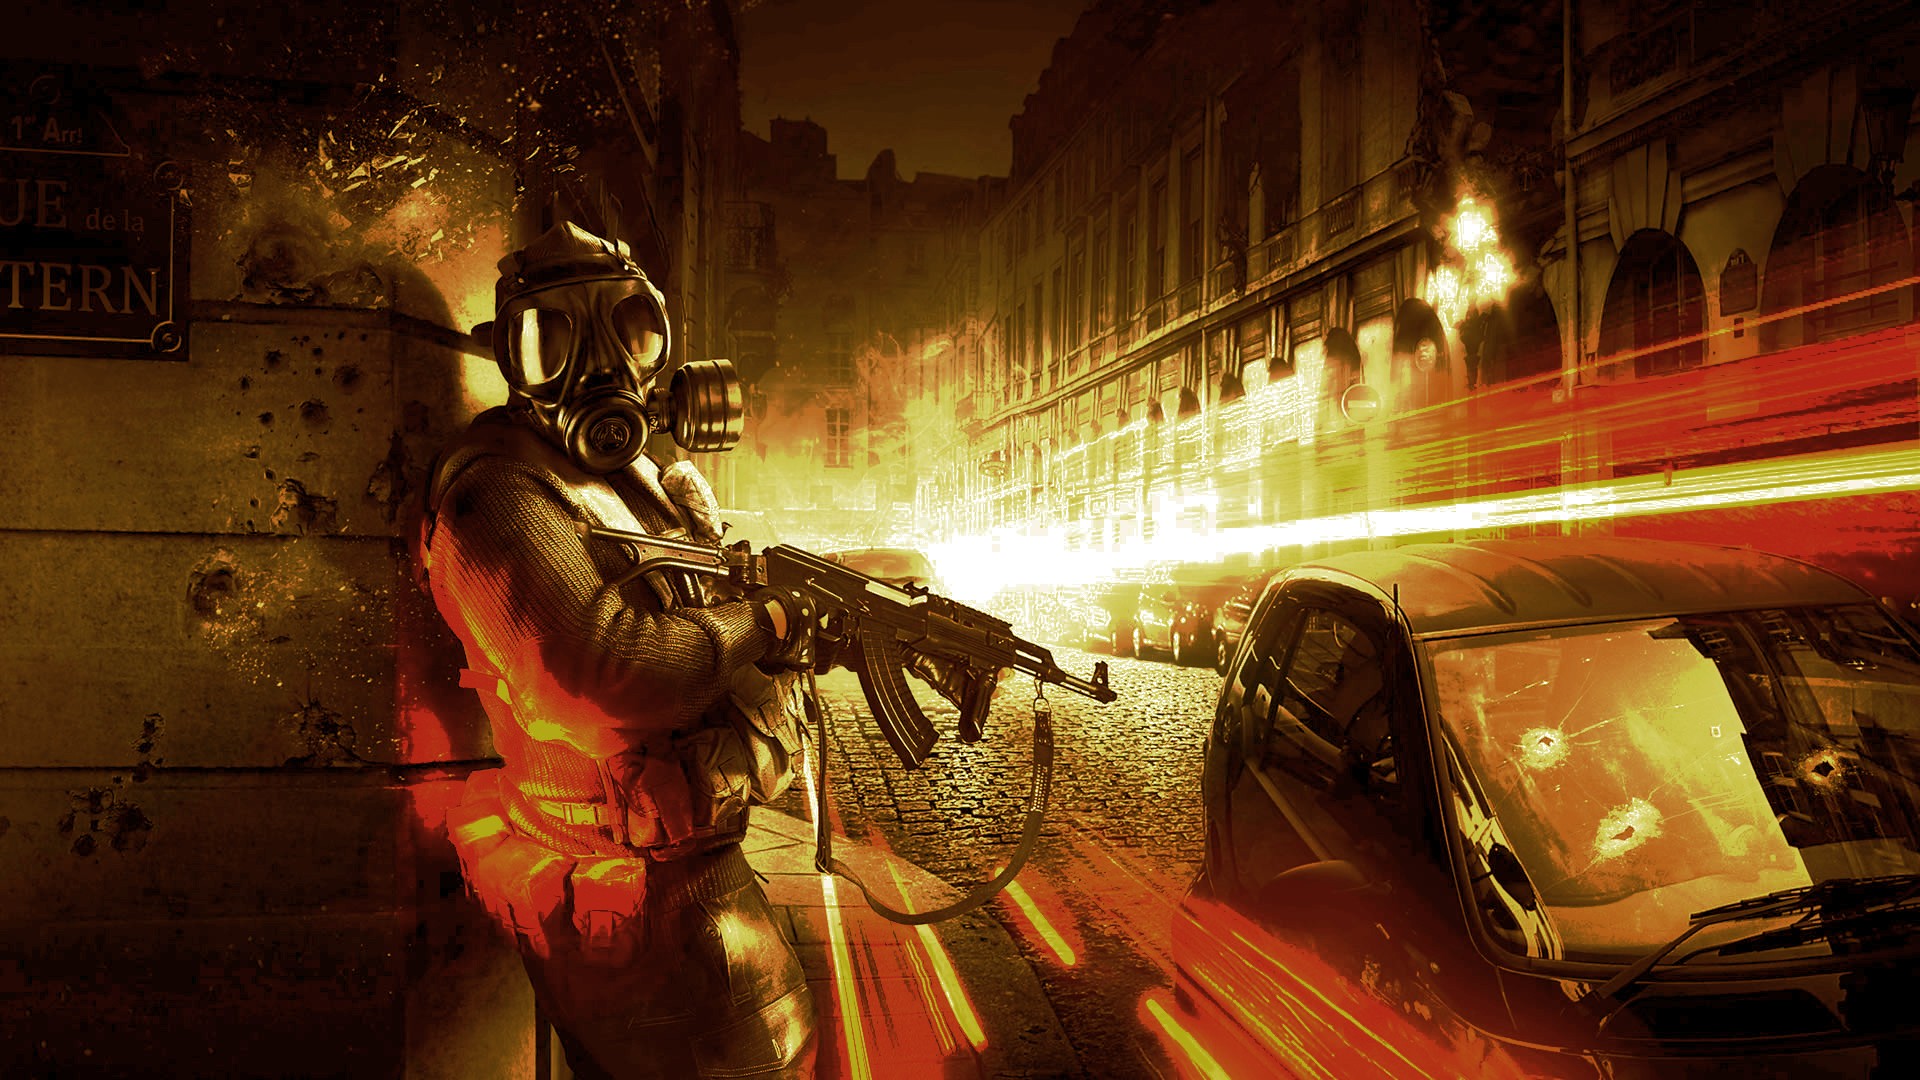 Video Game Battlefield 3 HD Wallpaper | Background Image